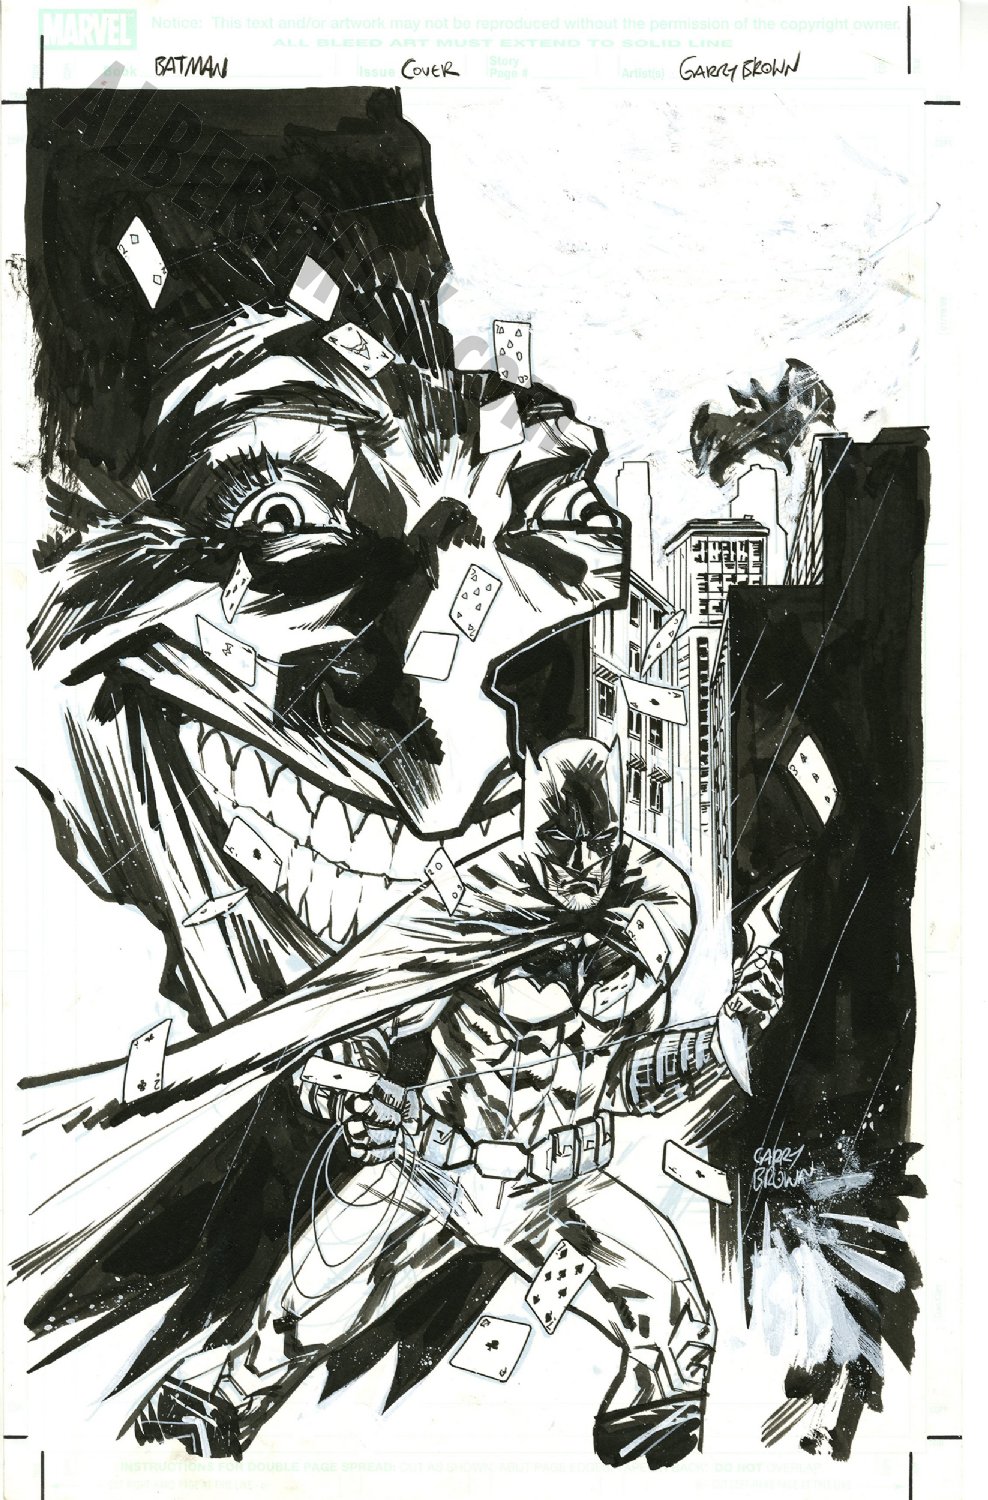 Albert Moy : Original Comic Art - Batman vs Joker by Garry Brown